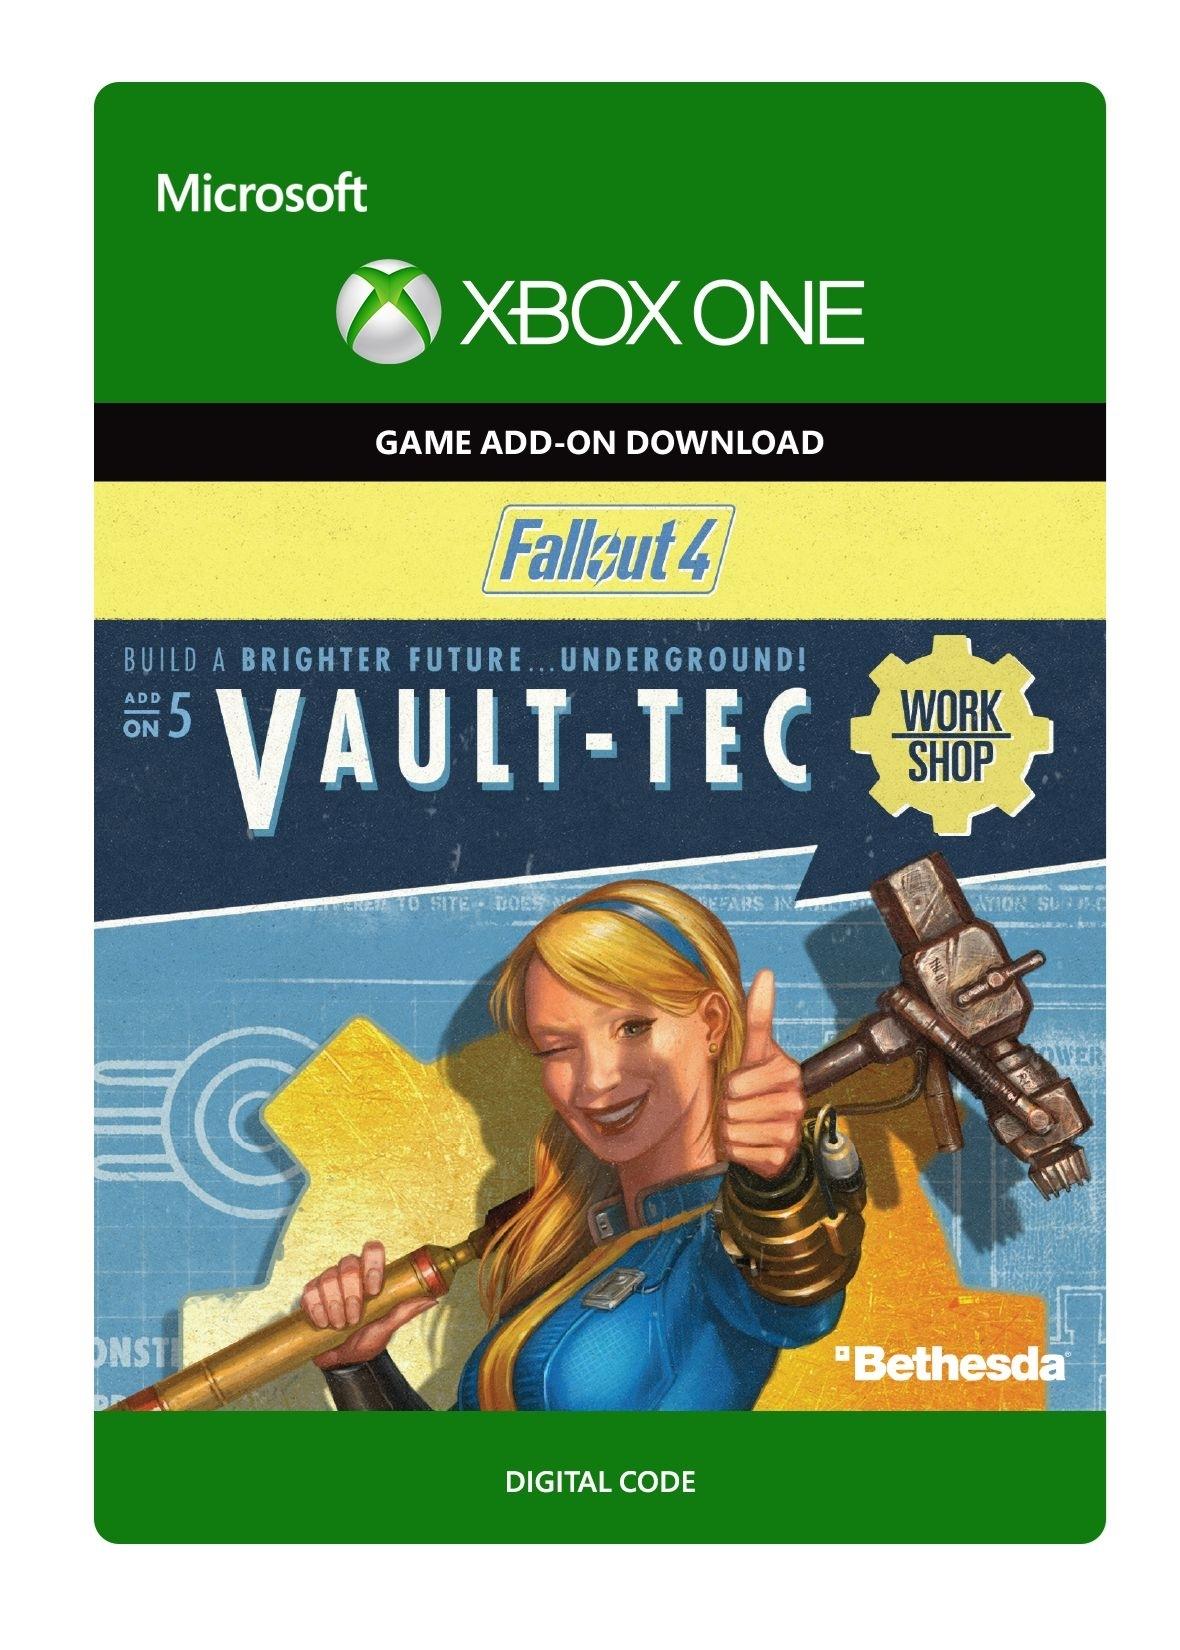 Fallout 4: Vault-Tec Workshop Xbox One Add-On (Digitale Code) | 7D4-00148 (598f750b-bf84-4139-87fb-01ce3c74ad70)